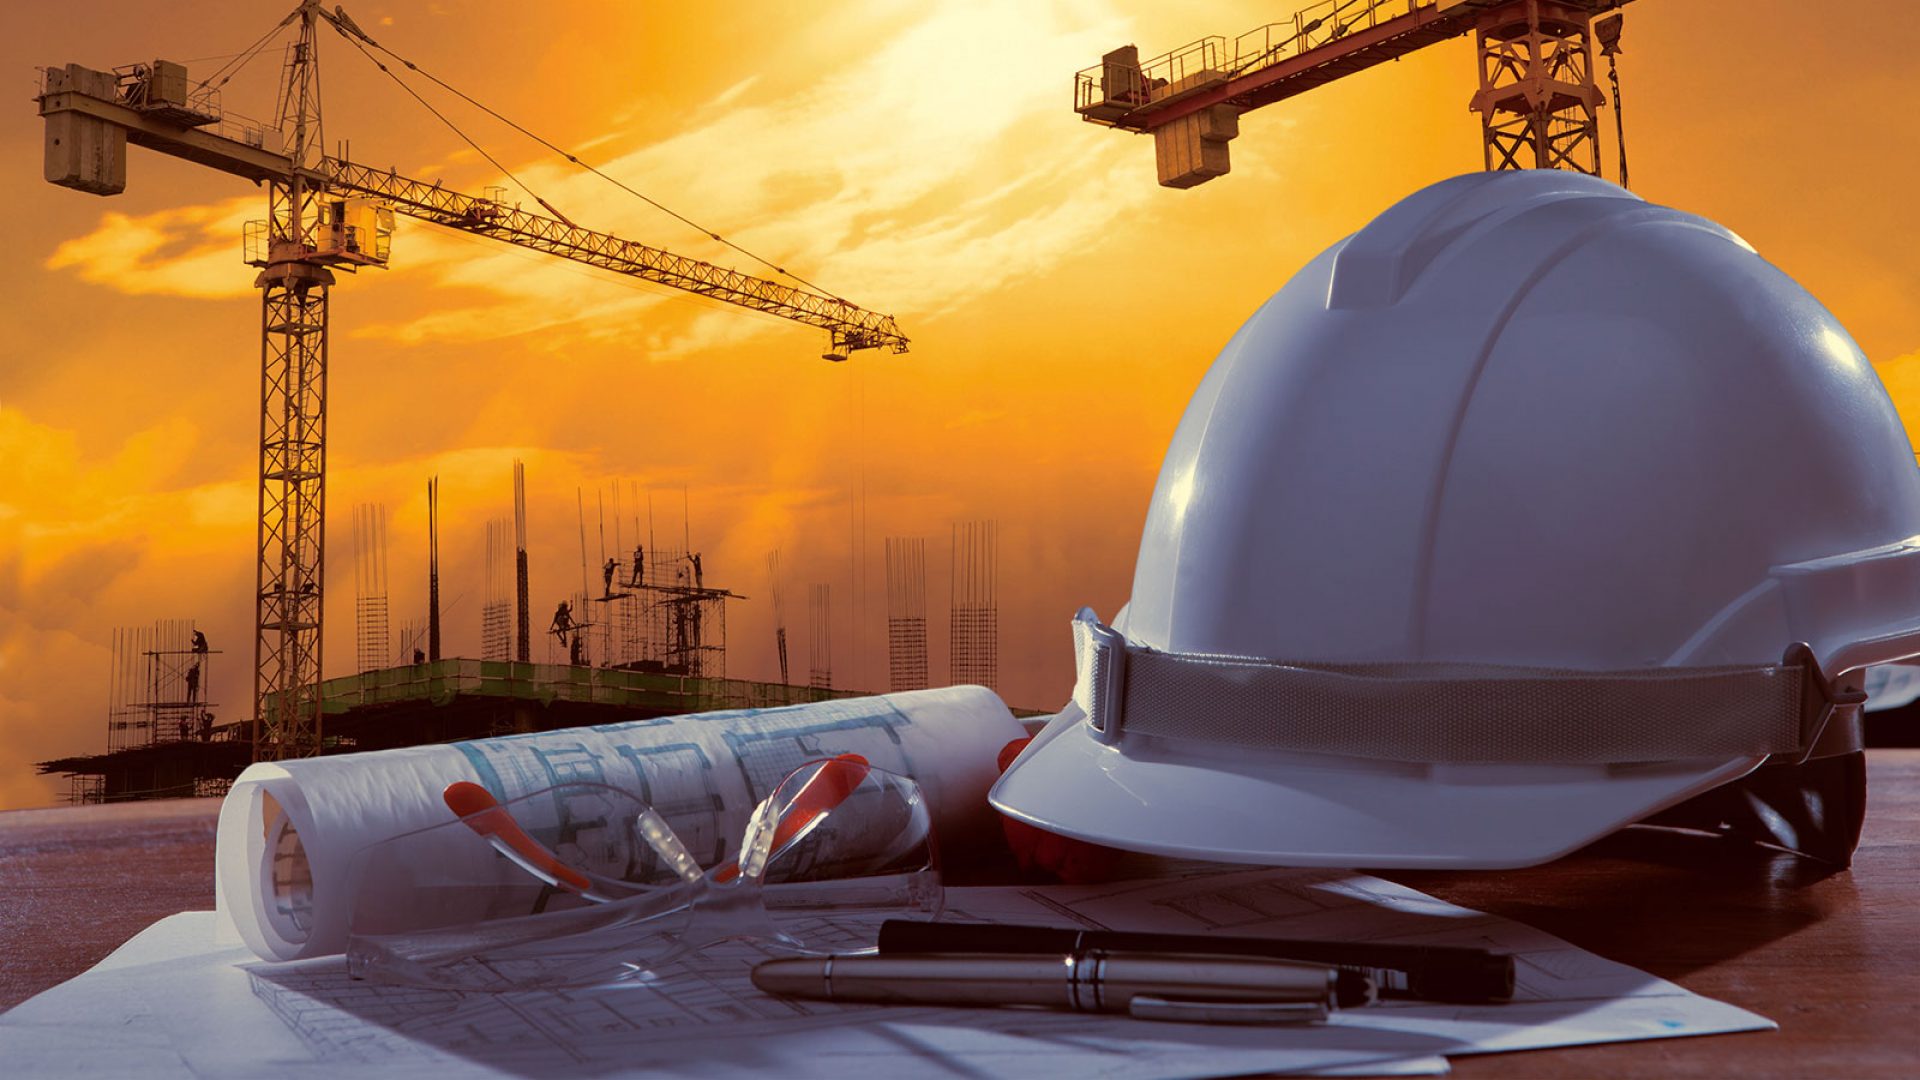 Construction Companies in Karachi 2022